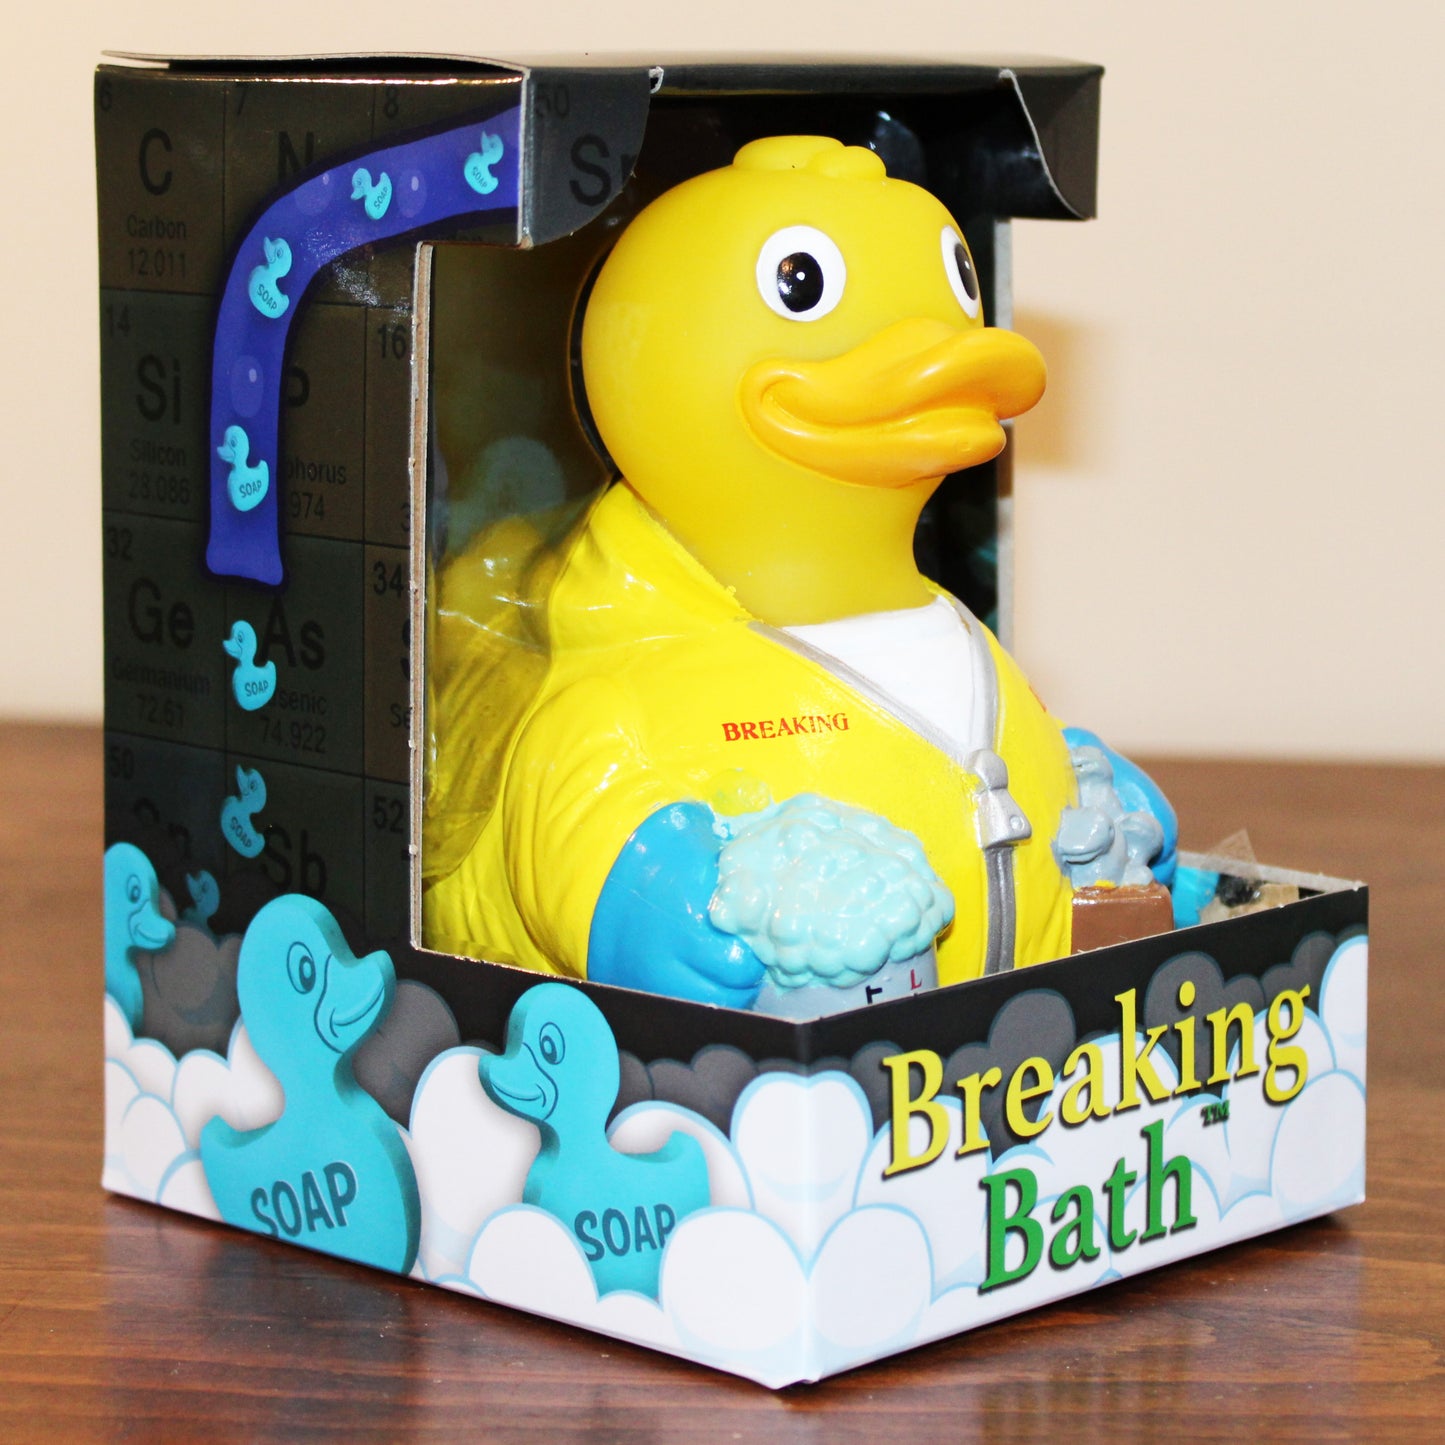 "Breaking Bath" Rubber Duck - Limited Edition by CelebriDucks